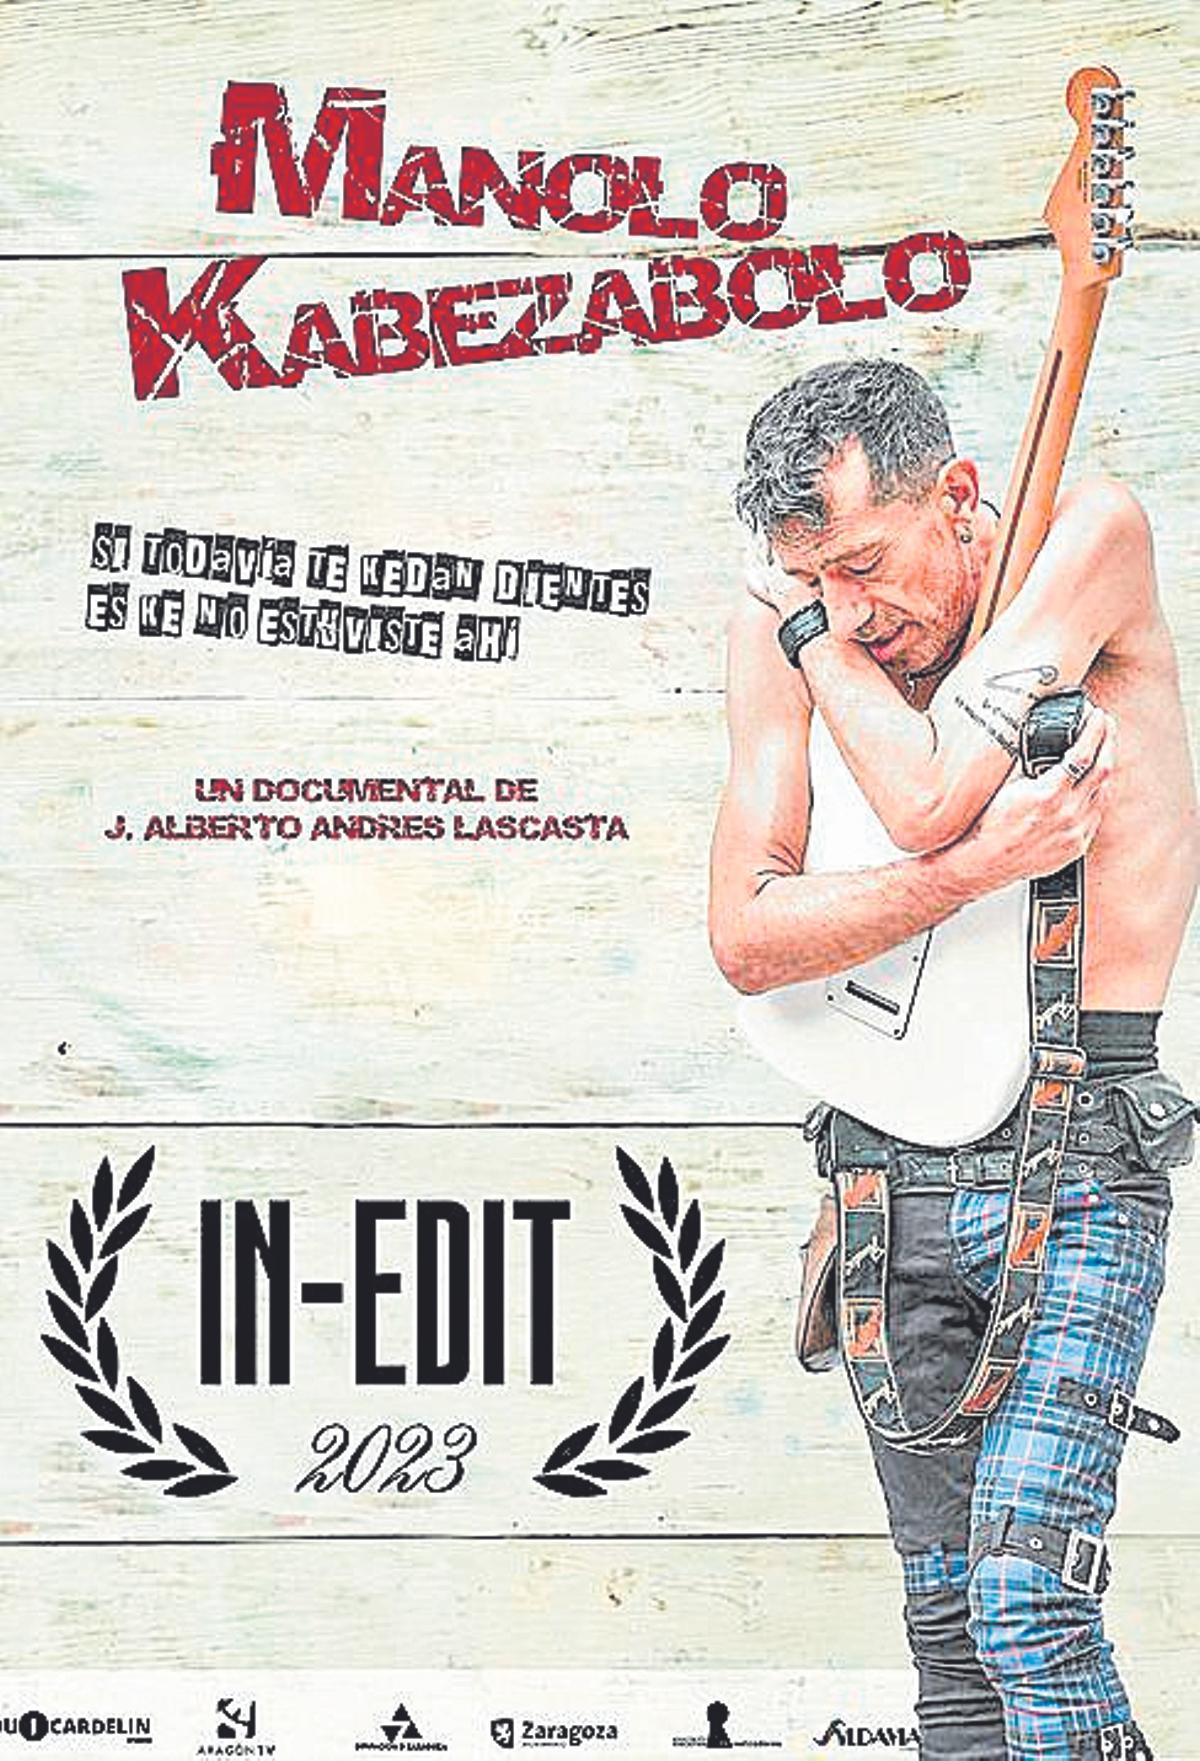 Cartel del documental de Manolo Kabezabolo.